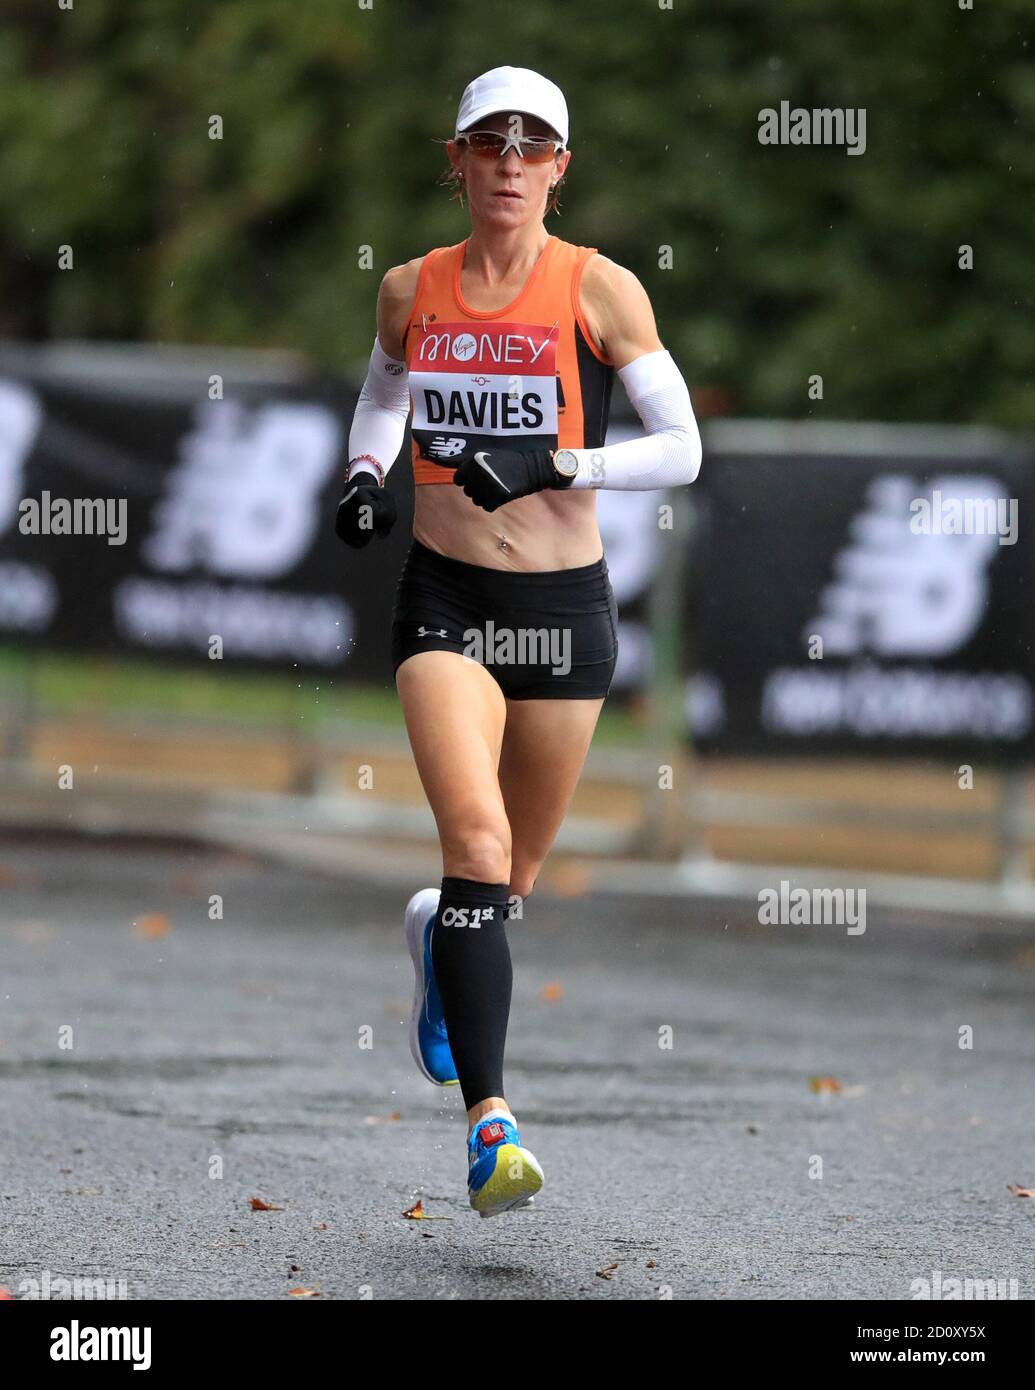 Great Britain's Helen Davies in action during the Women's Elite Race during the Virgin Money London Marathon around St James' Park. Stock Photo